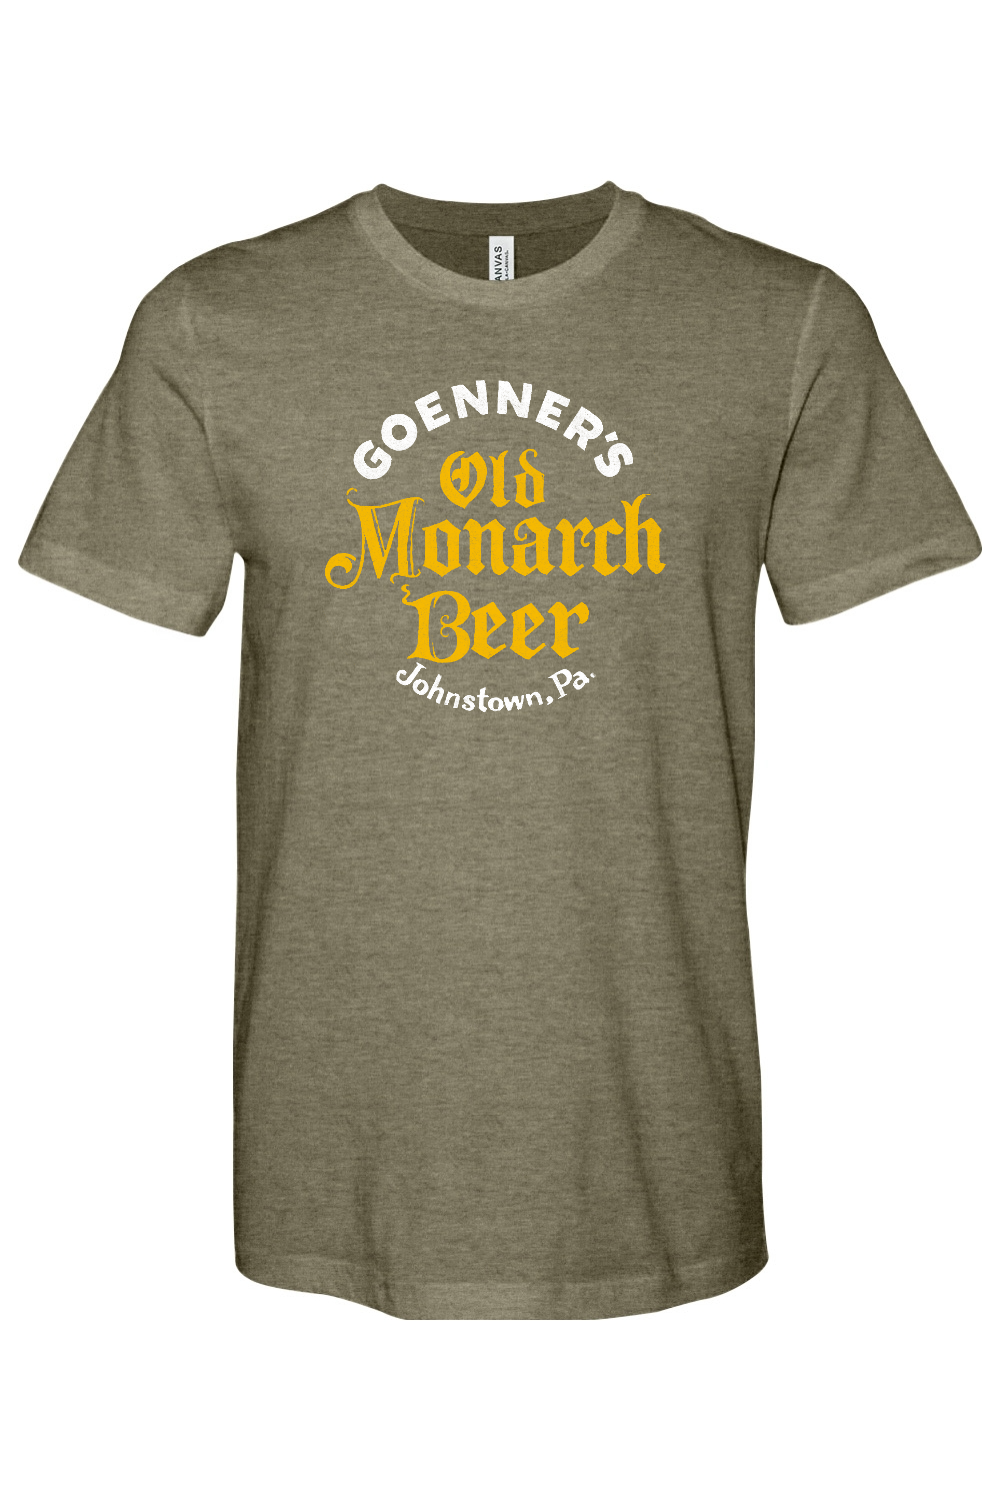 Goenner's Old Monarch Beer - Johnstown, PA - Yinzylvania